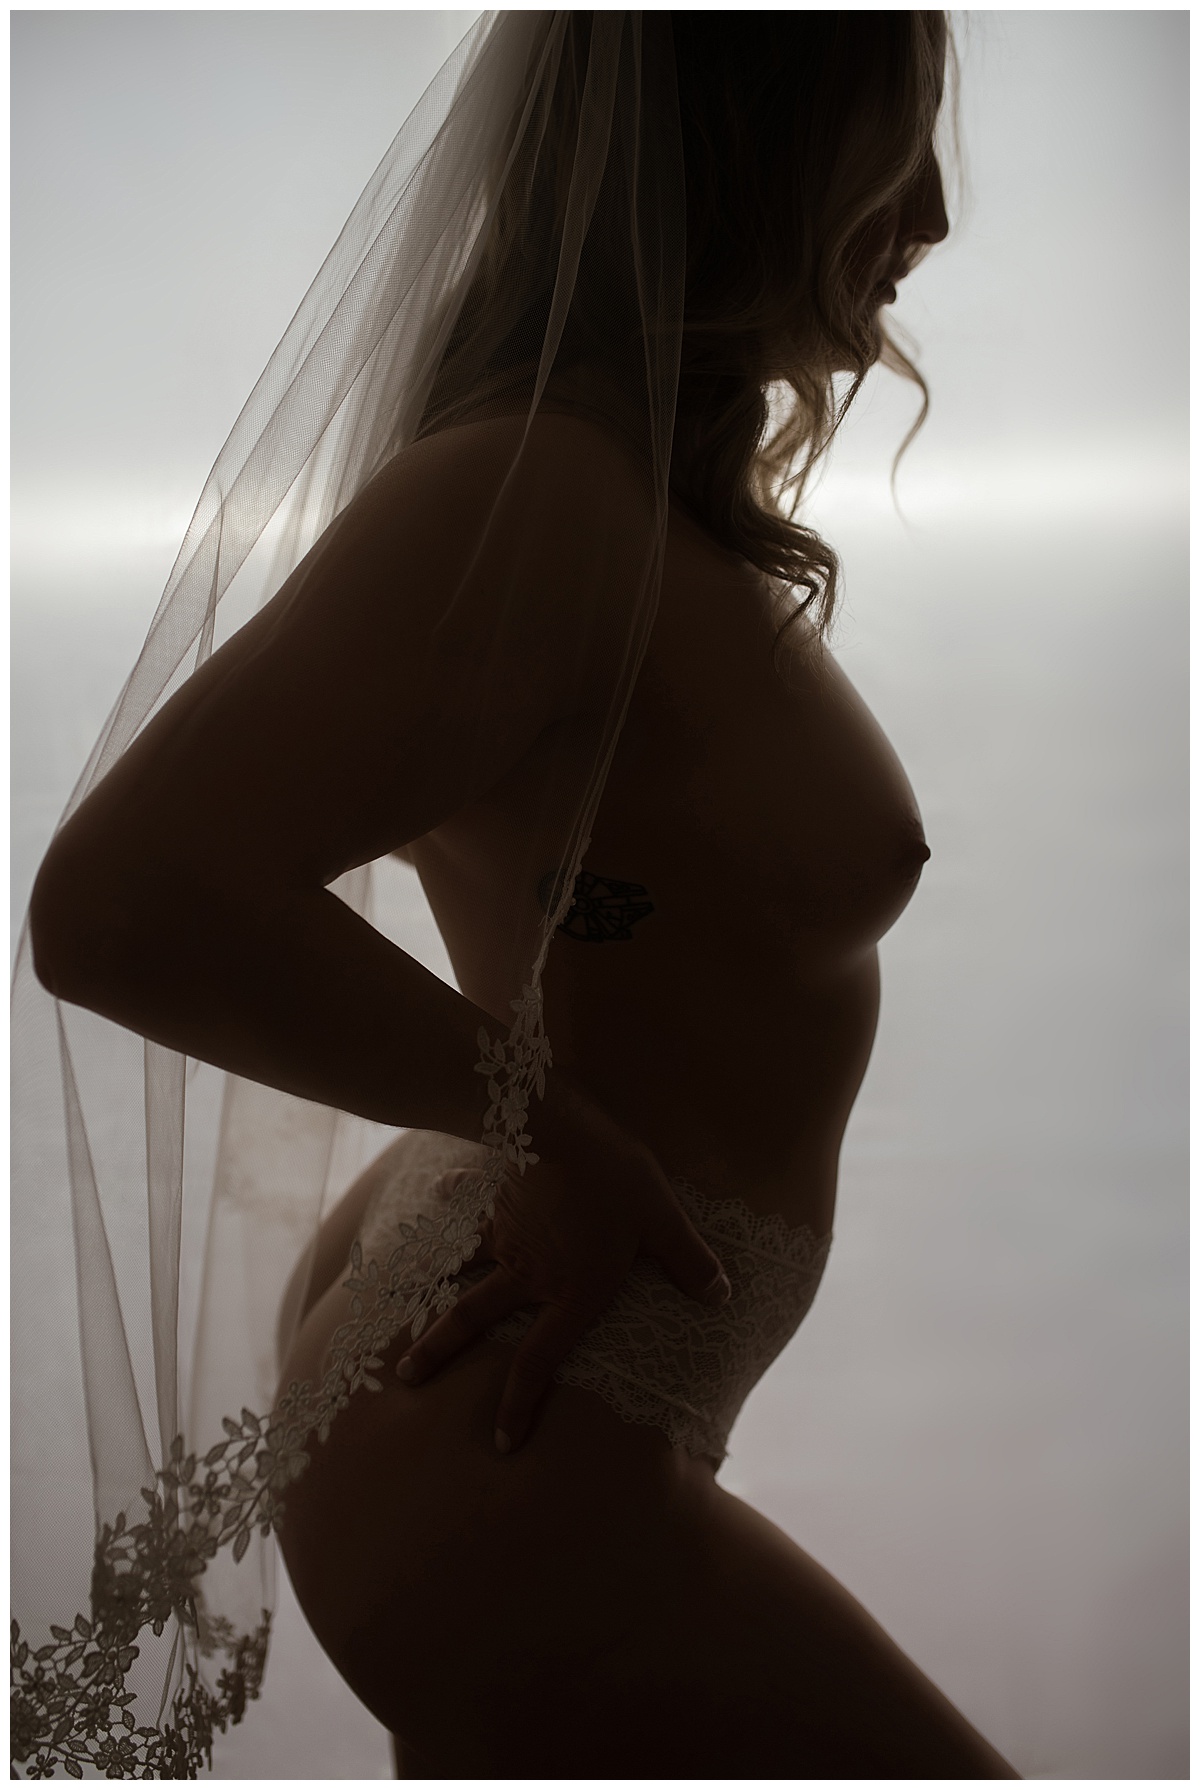 Adult wears wedding veil during her Bridal Boudoir session